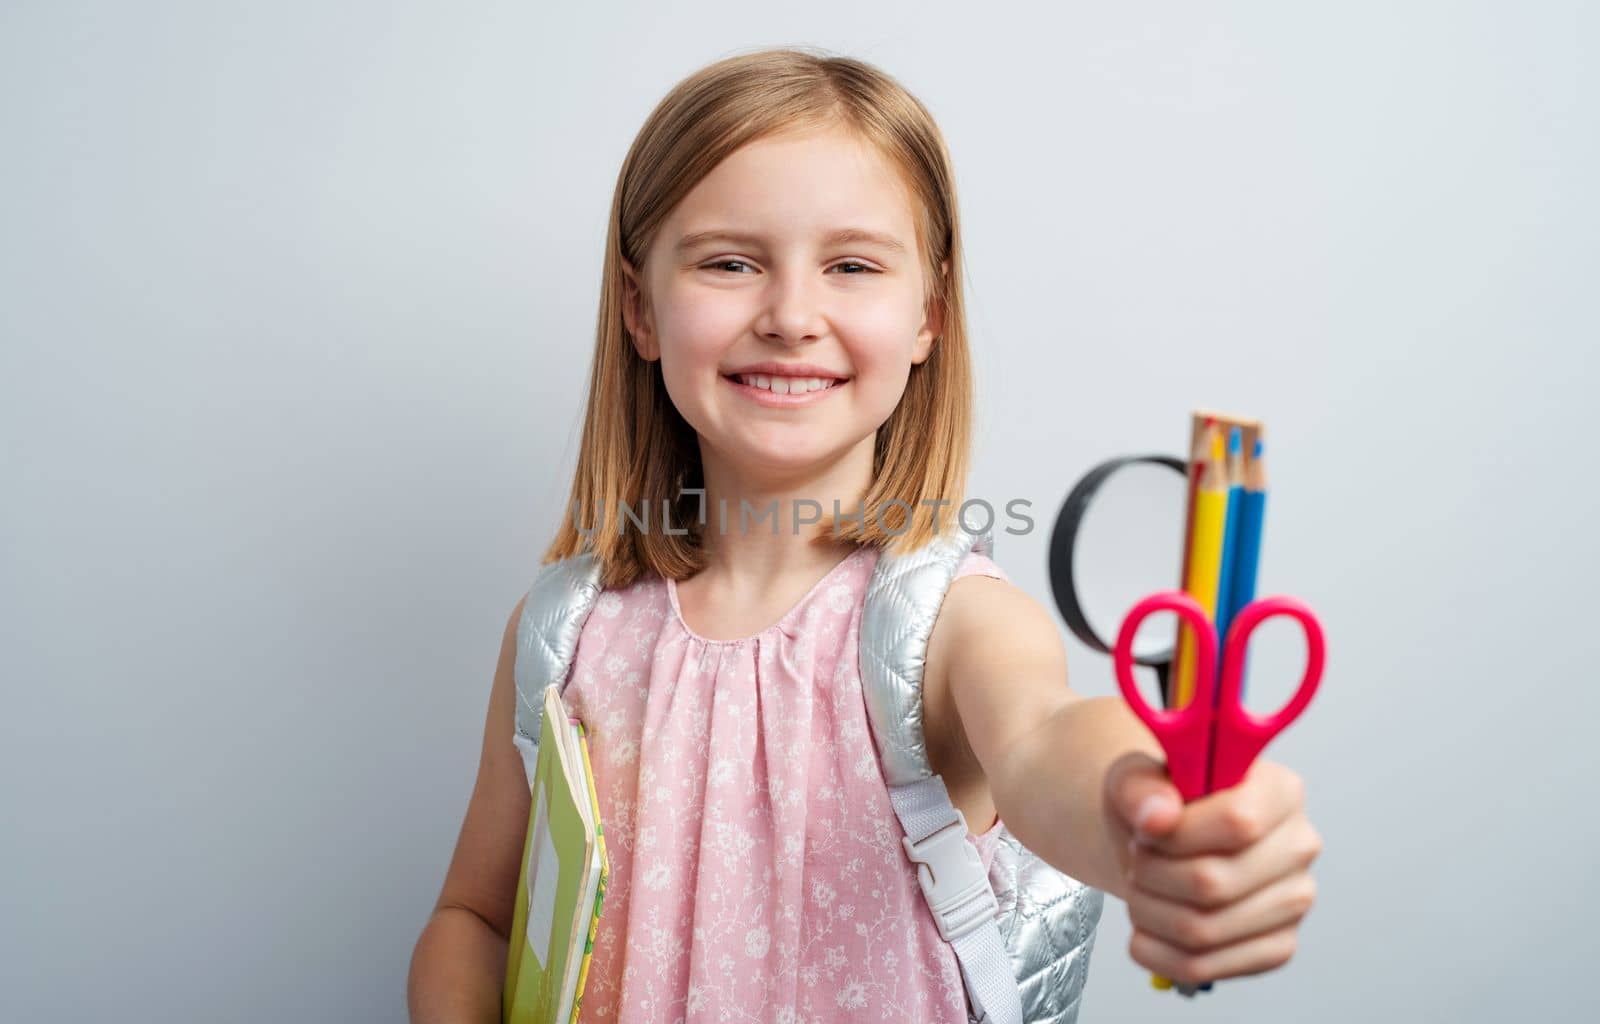 Schoolgirl with stationery supplies by GekaSkr